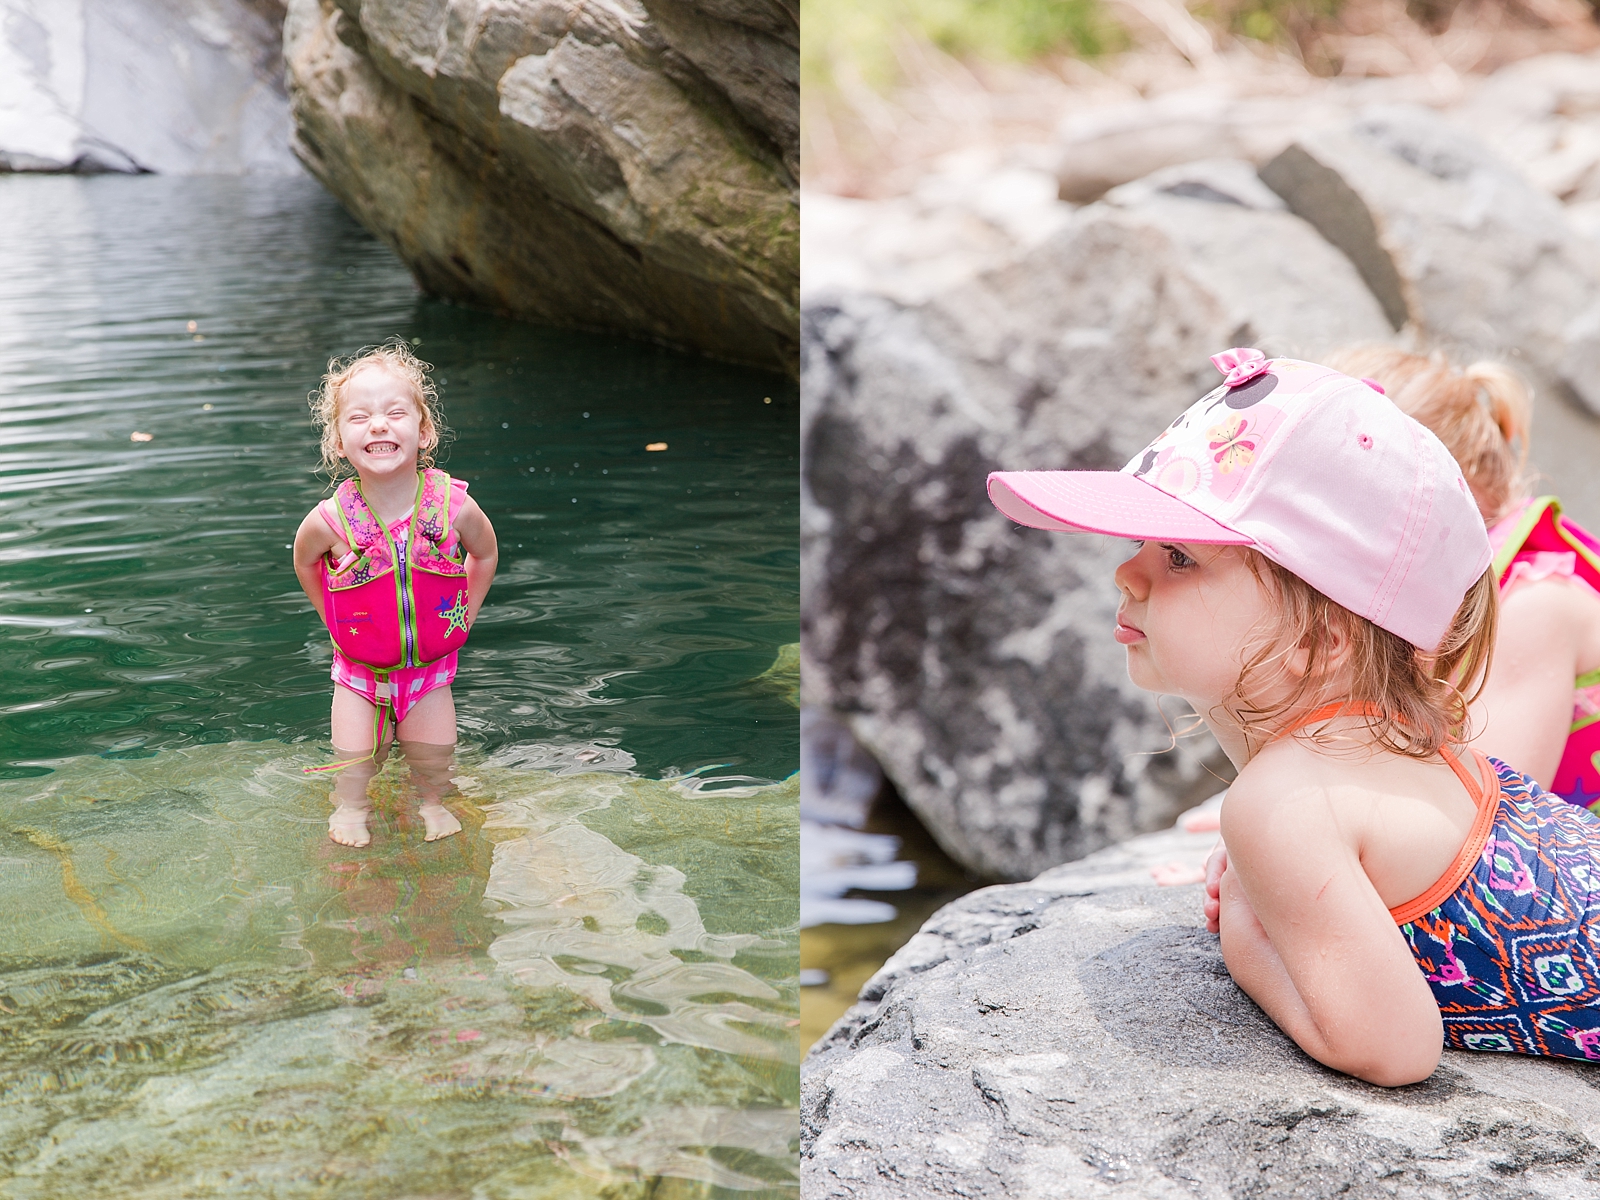 Nantahala Lake little girl smiling in life jacket in water and little girl sunbathing on rock photos